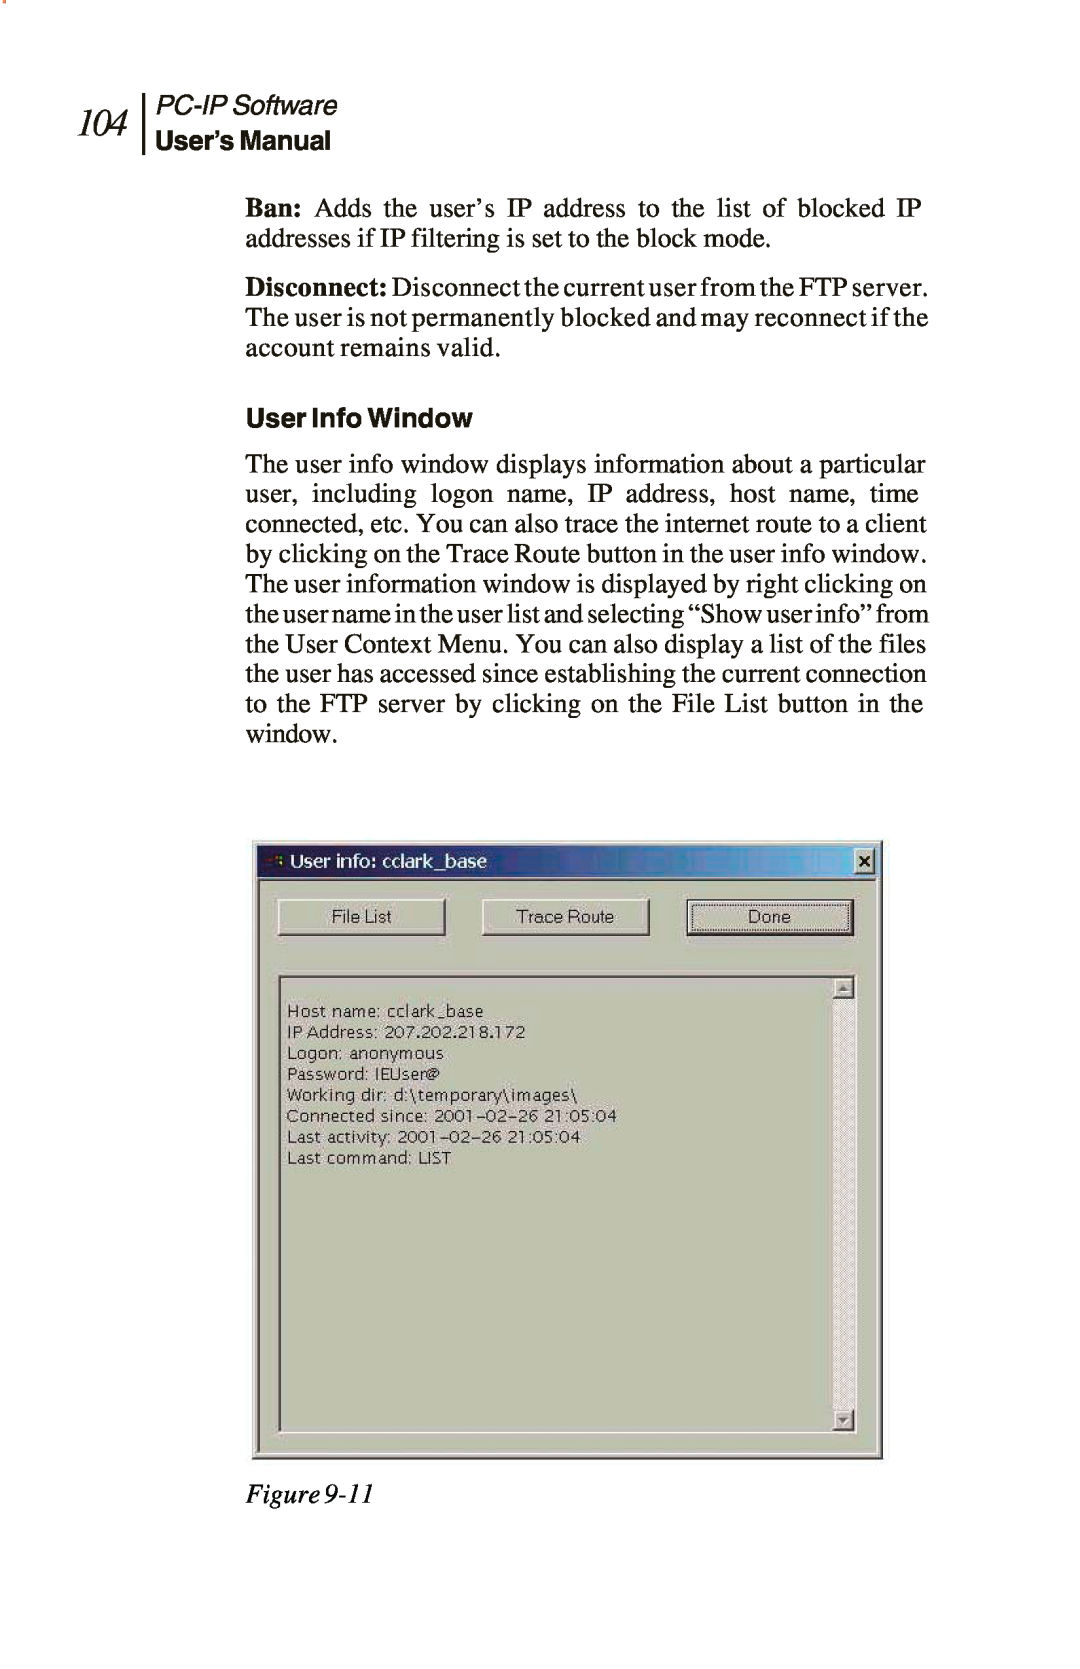 Sunrise Global CM250 IP, CM100 IP, and CM500 IP manual User Info Window, PC-IPSoftware, User’s Manual, Figure 